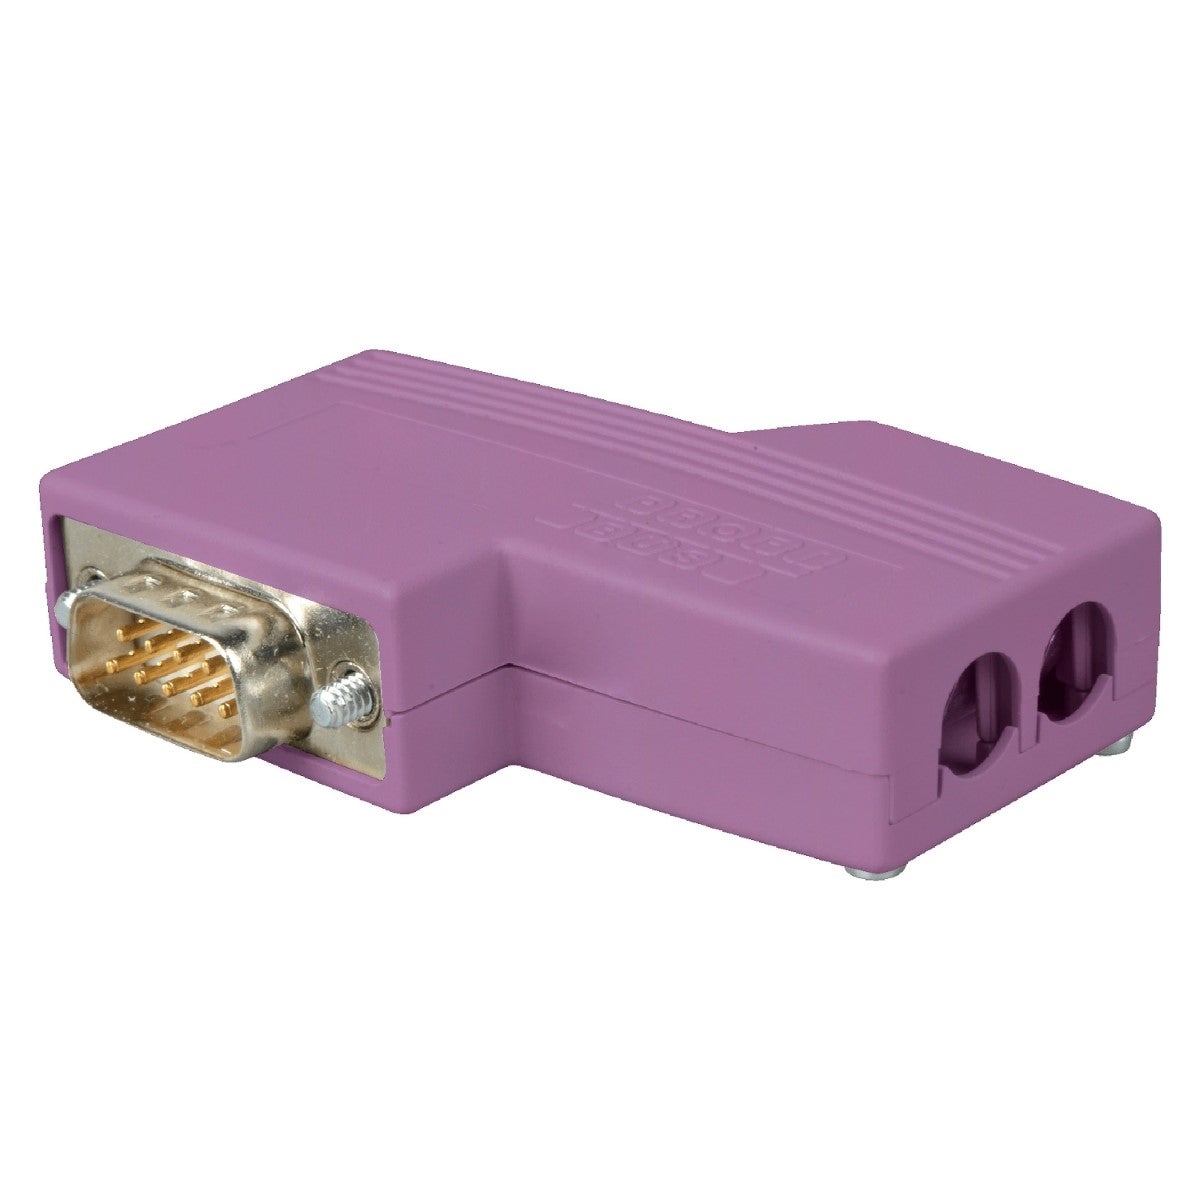 Profibus DP in-line connector - for communication adaptor